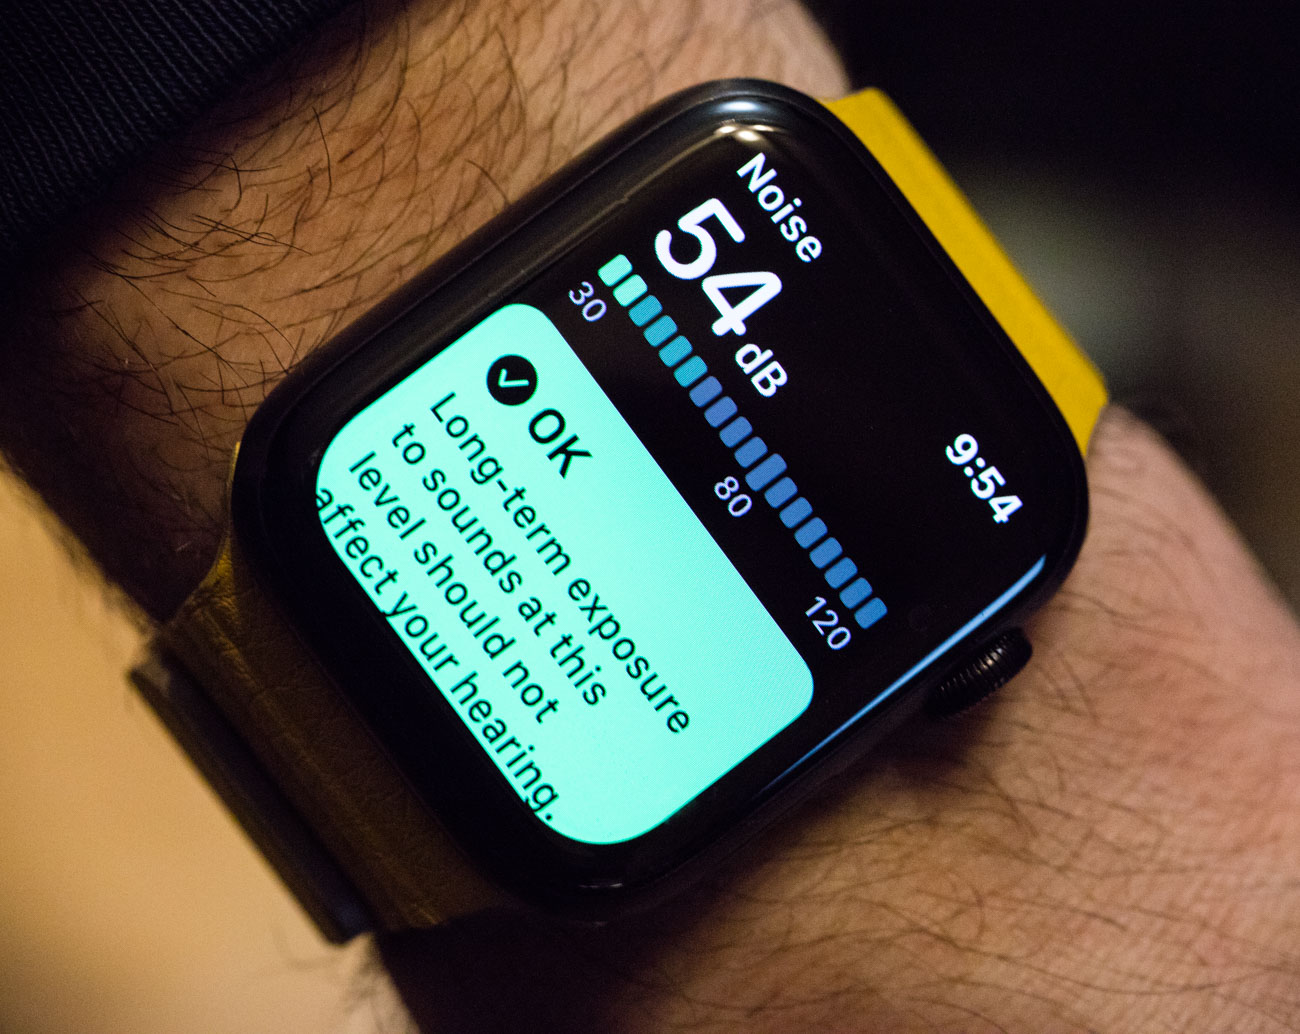 Apple Watch Series 5 Displays Information I Most Appreciate On My Wrist